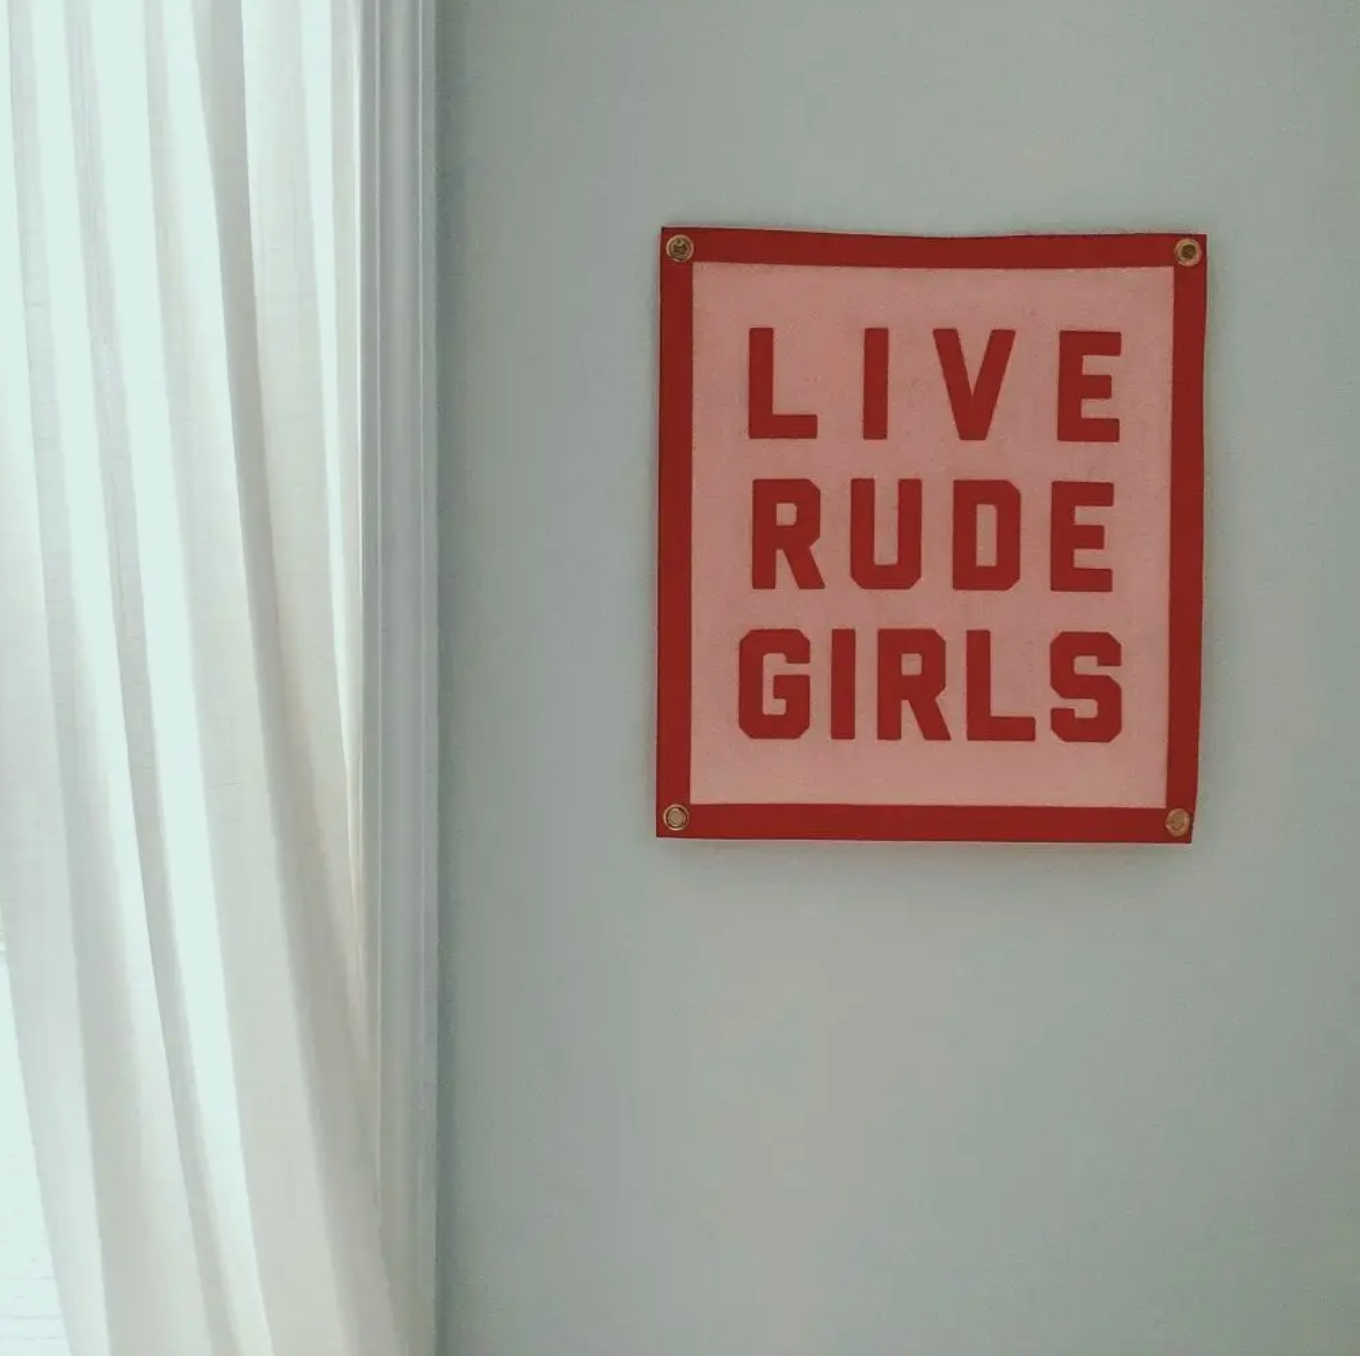 Live Rude Girls banner